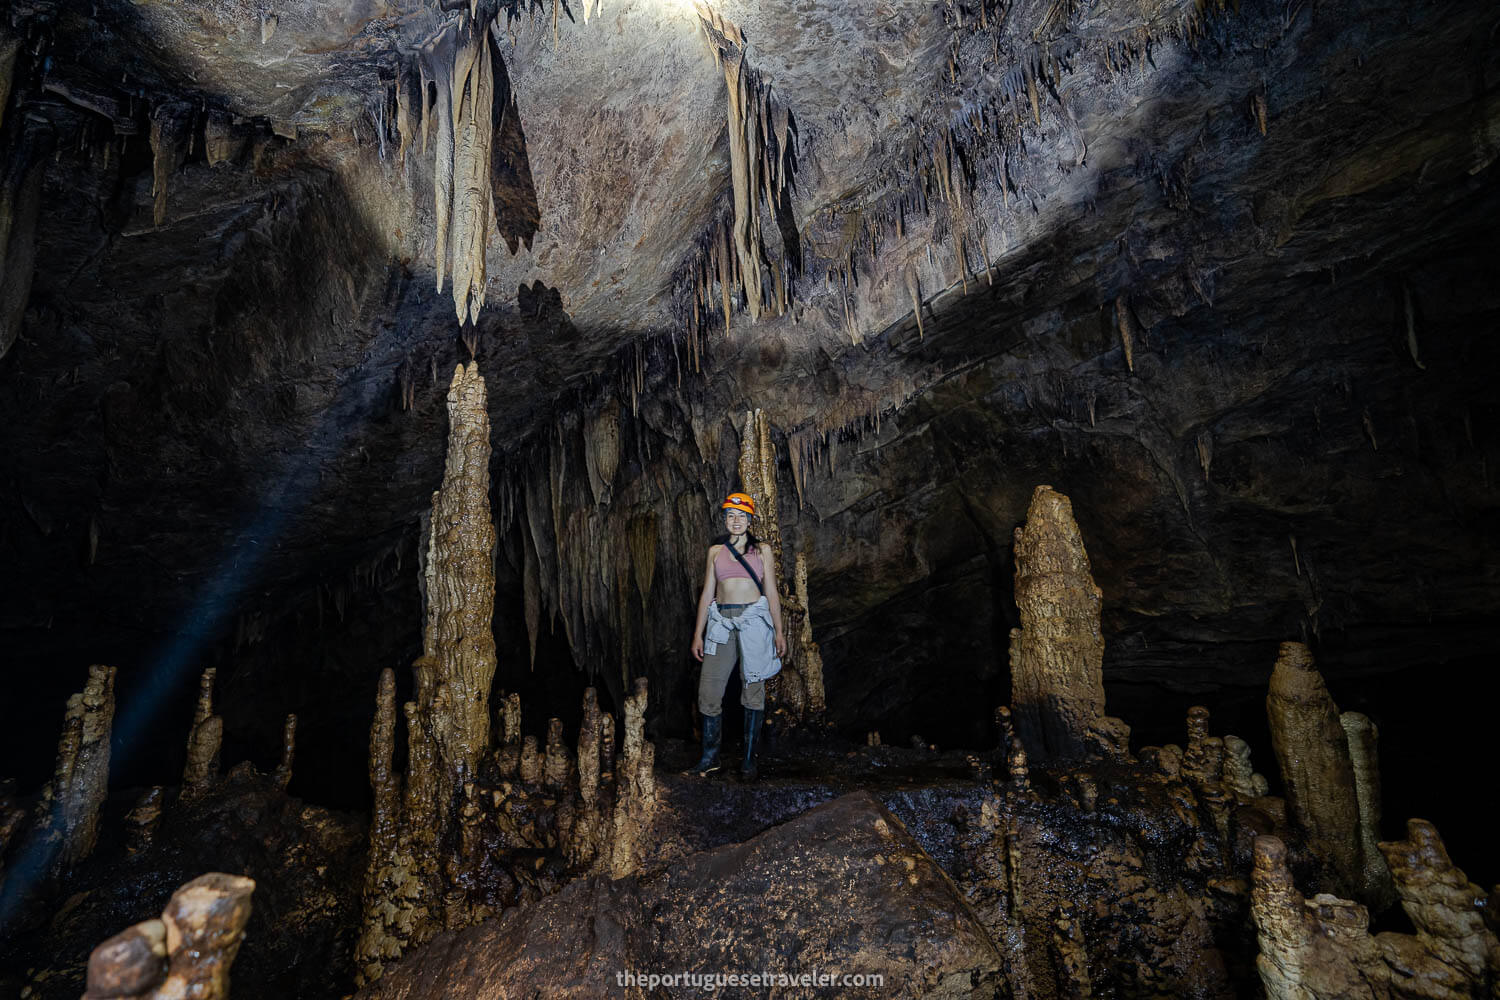 Jhos at the "Graveyard" of stalactites and stalagmites